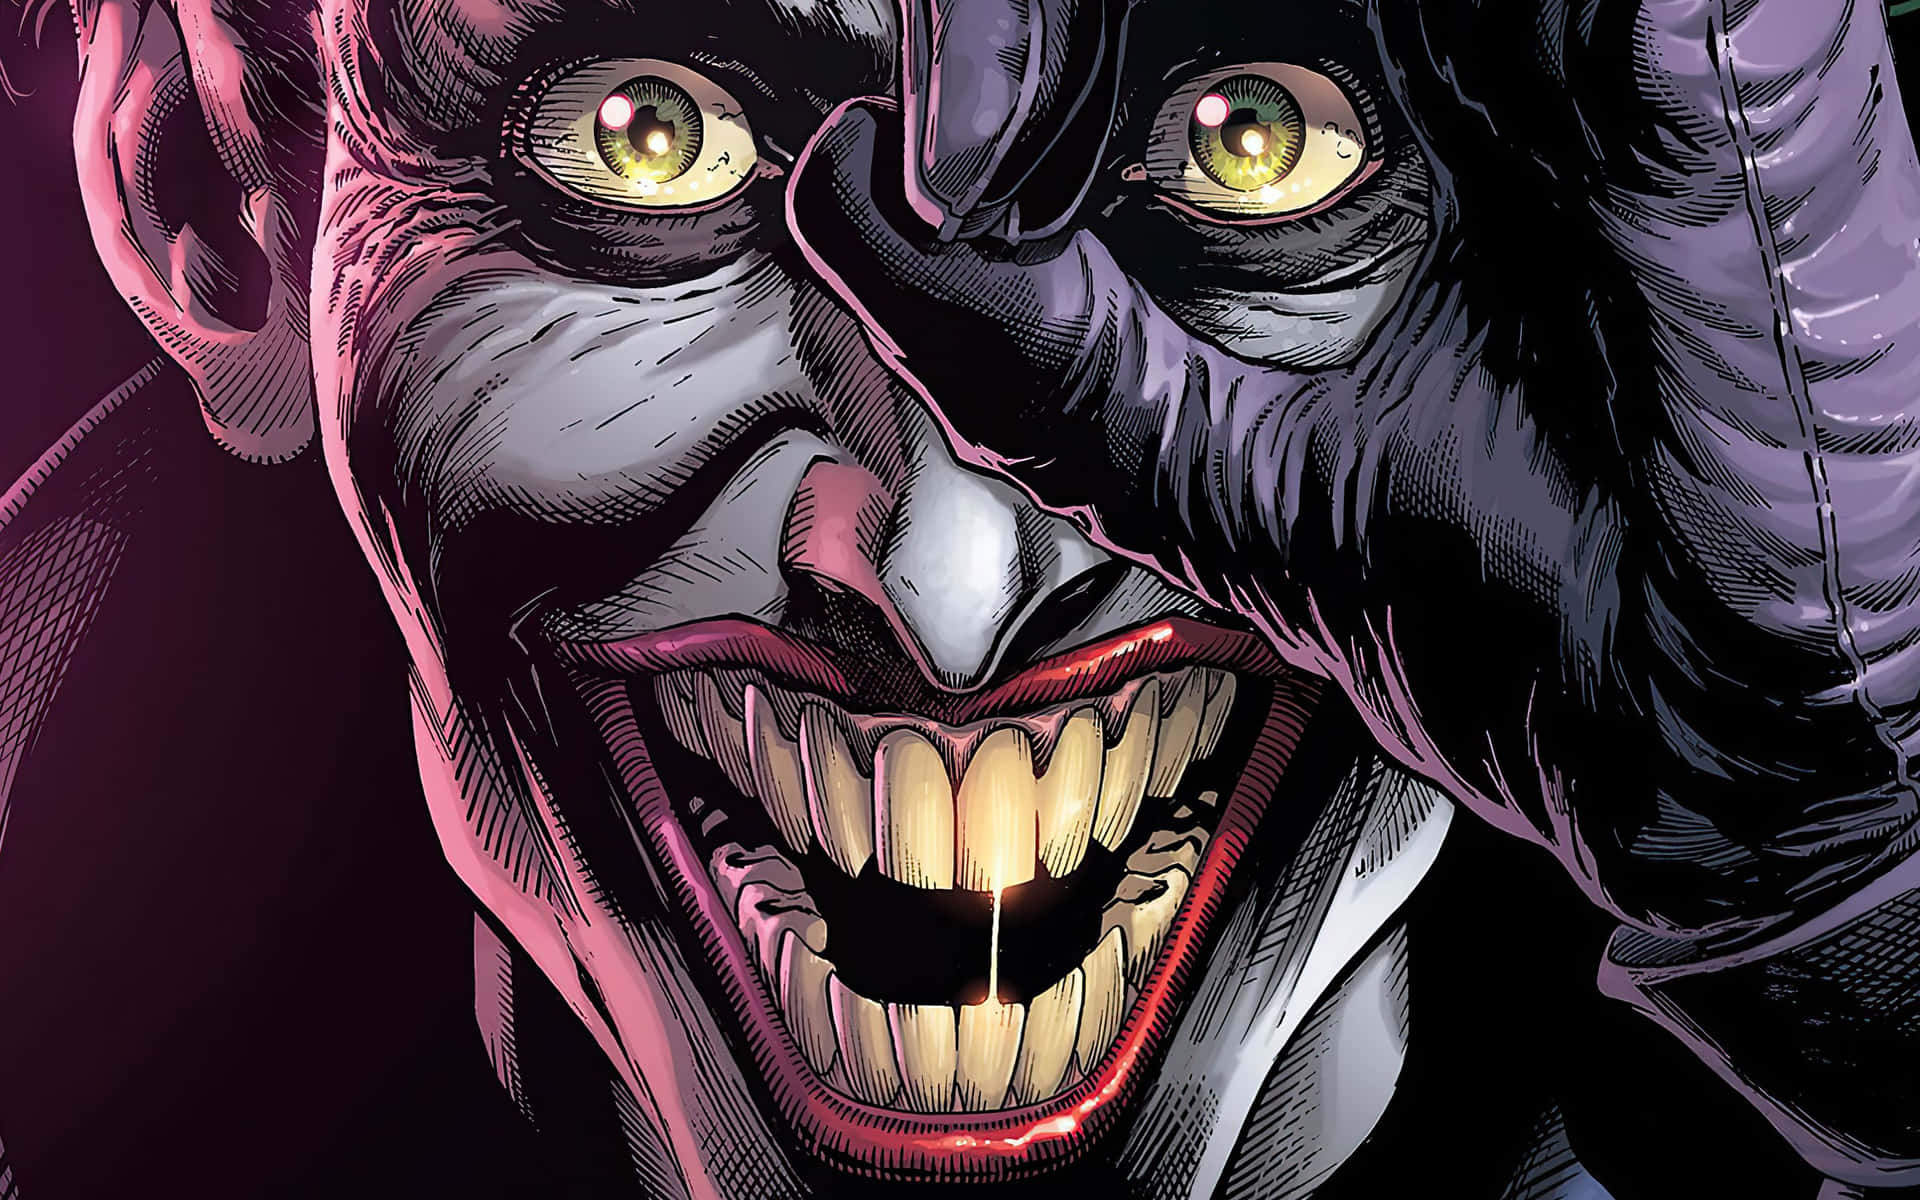 A Haunting Gaze From The Dangerous Joker